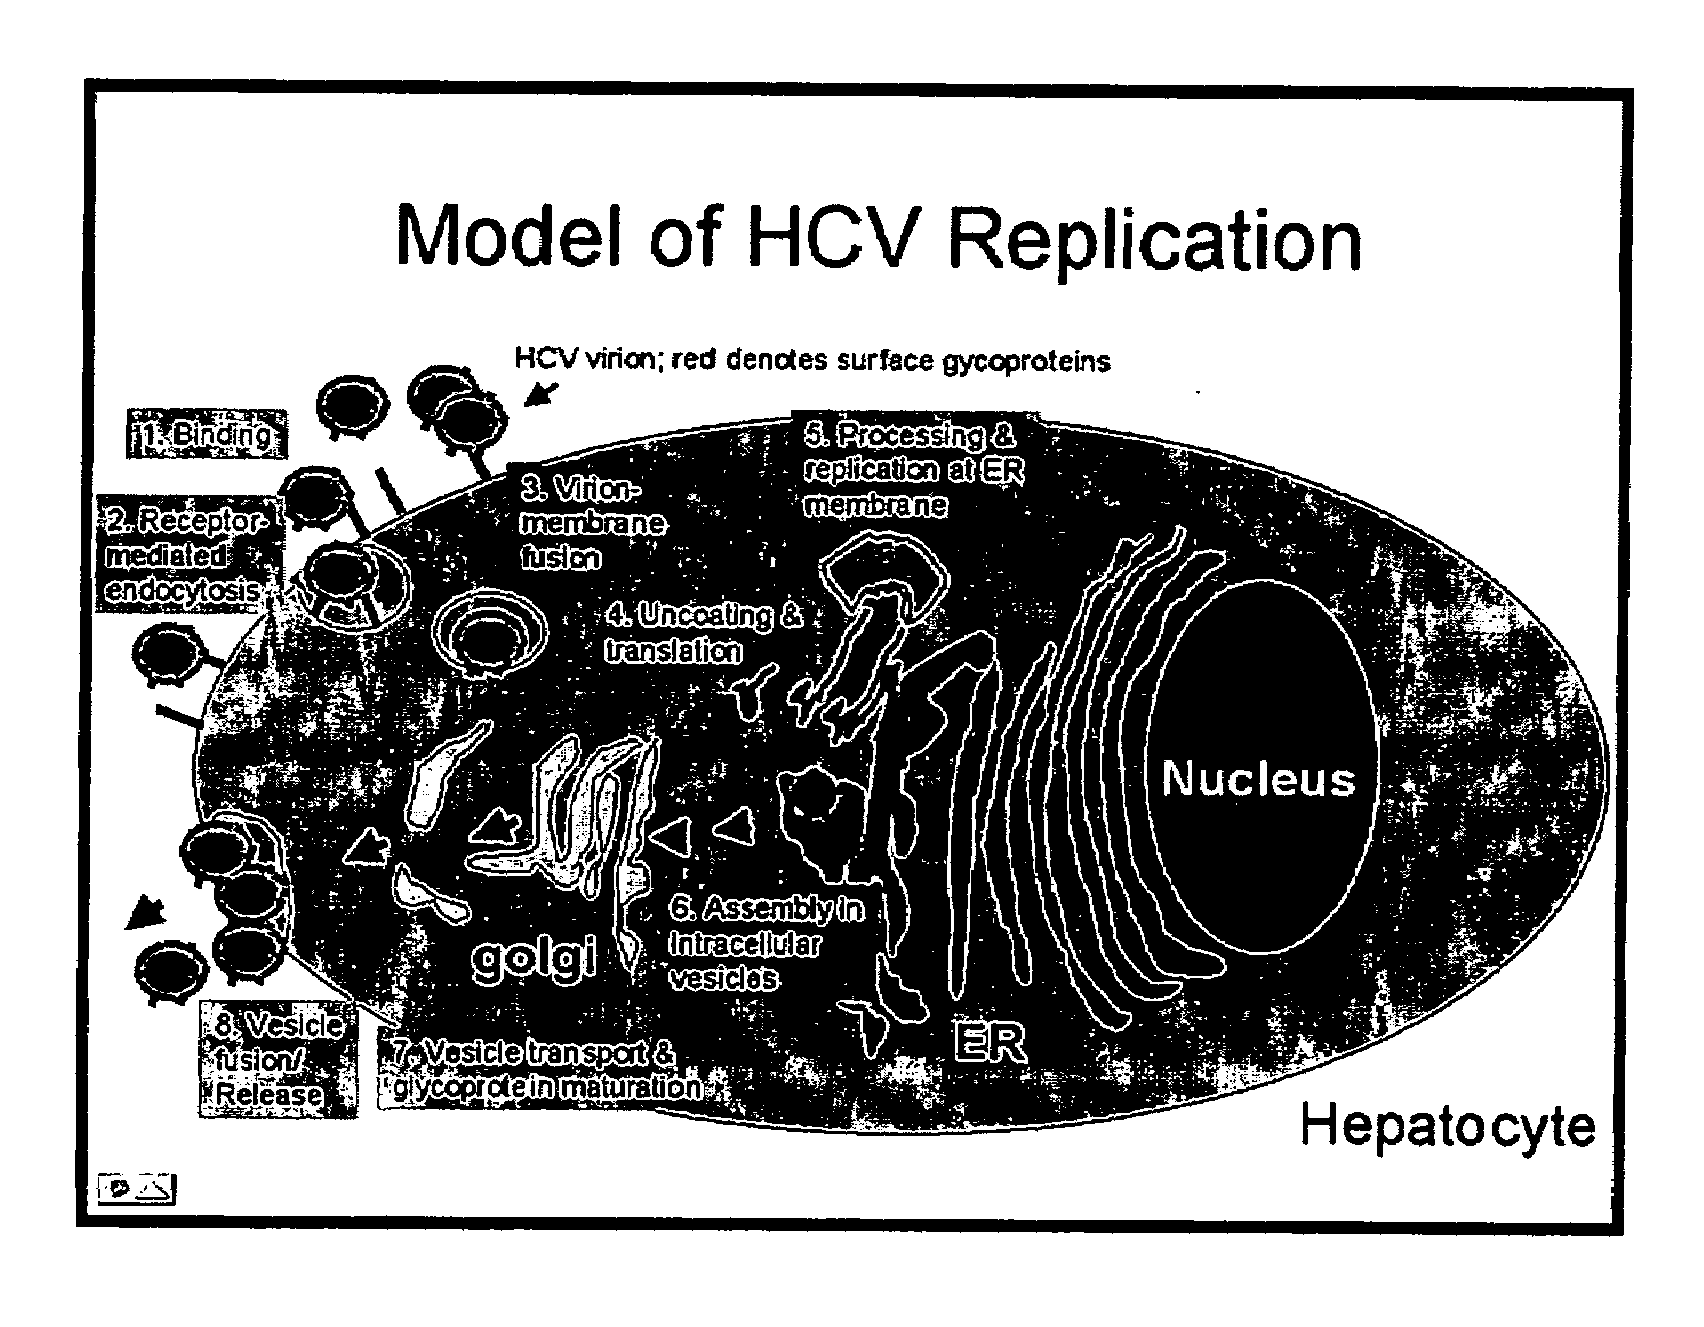 Methods for the production of HCV, assaying HCV entry, and screening drugs and cellular receptors for HCV